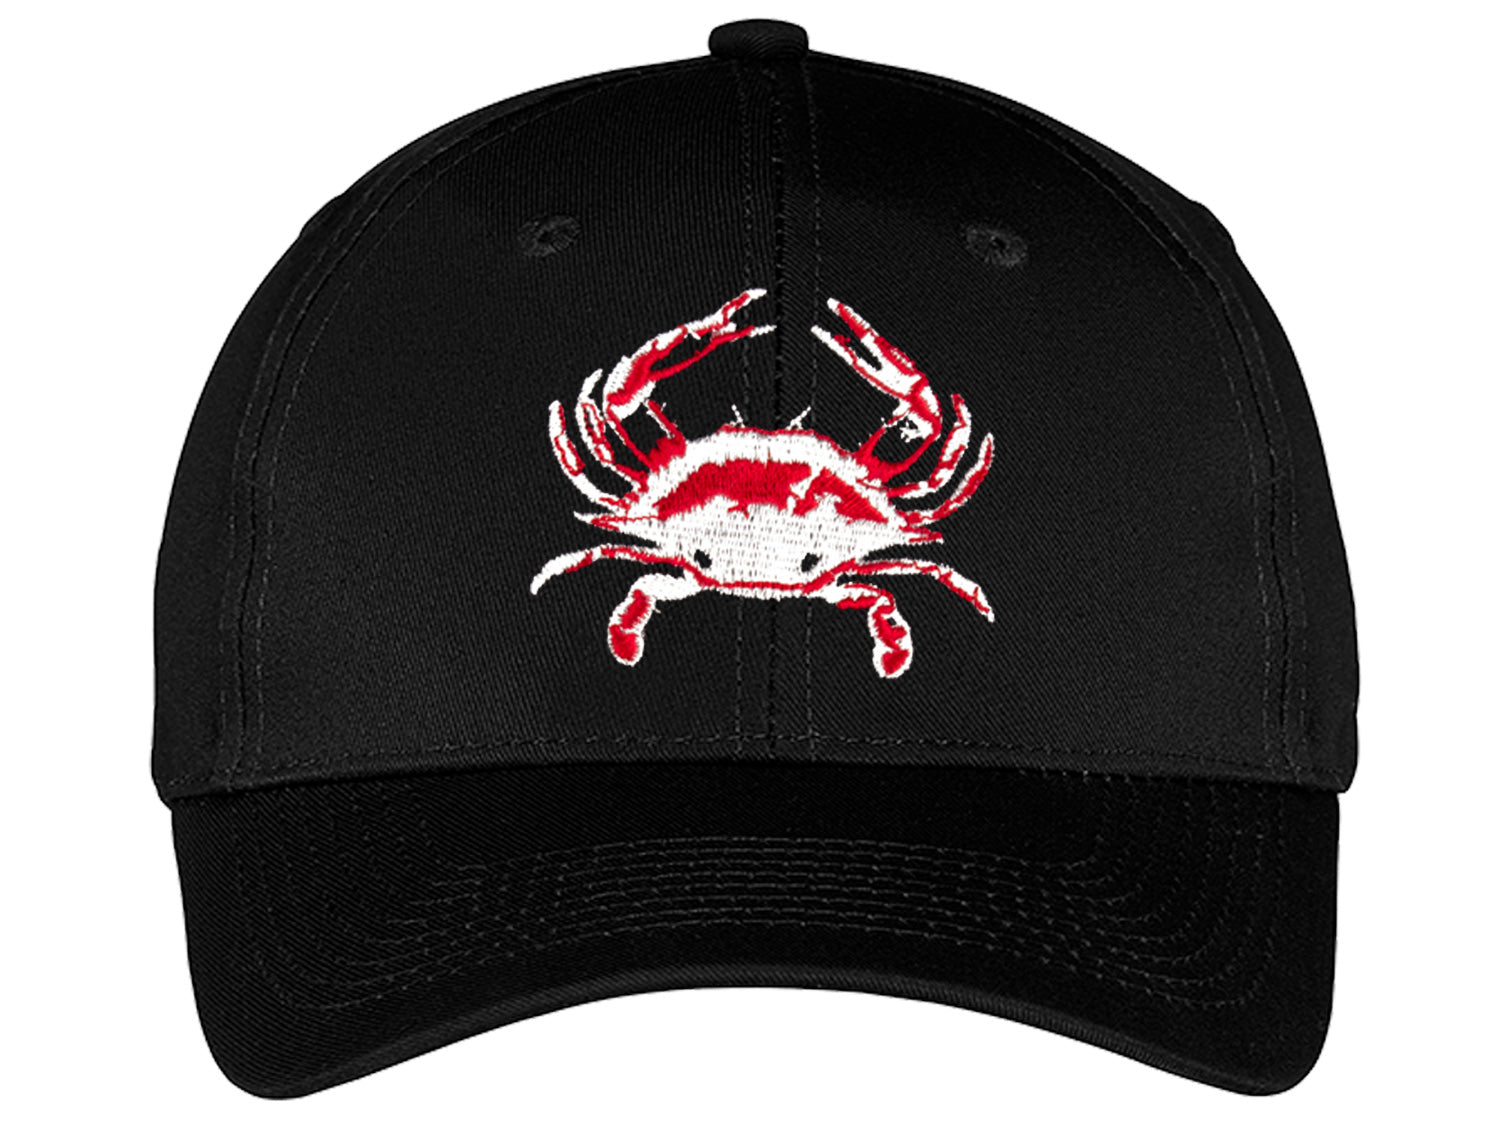 Blue Crab "Reel Crabby" Hat - Black Unstructured Dad Hat